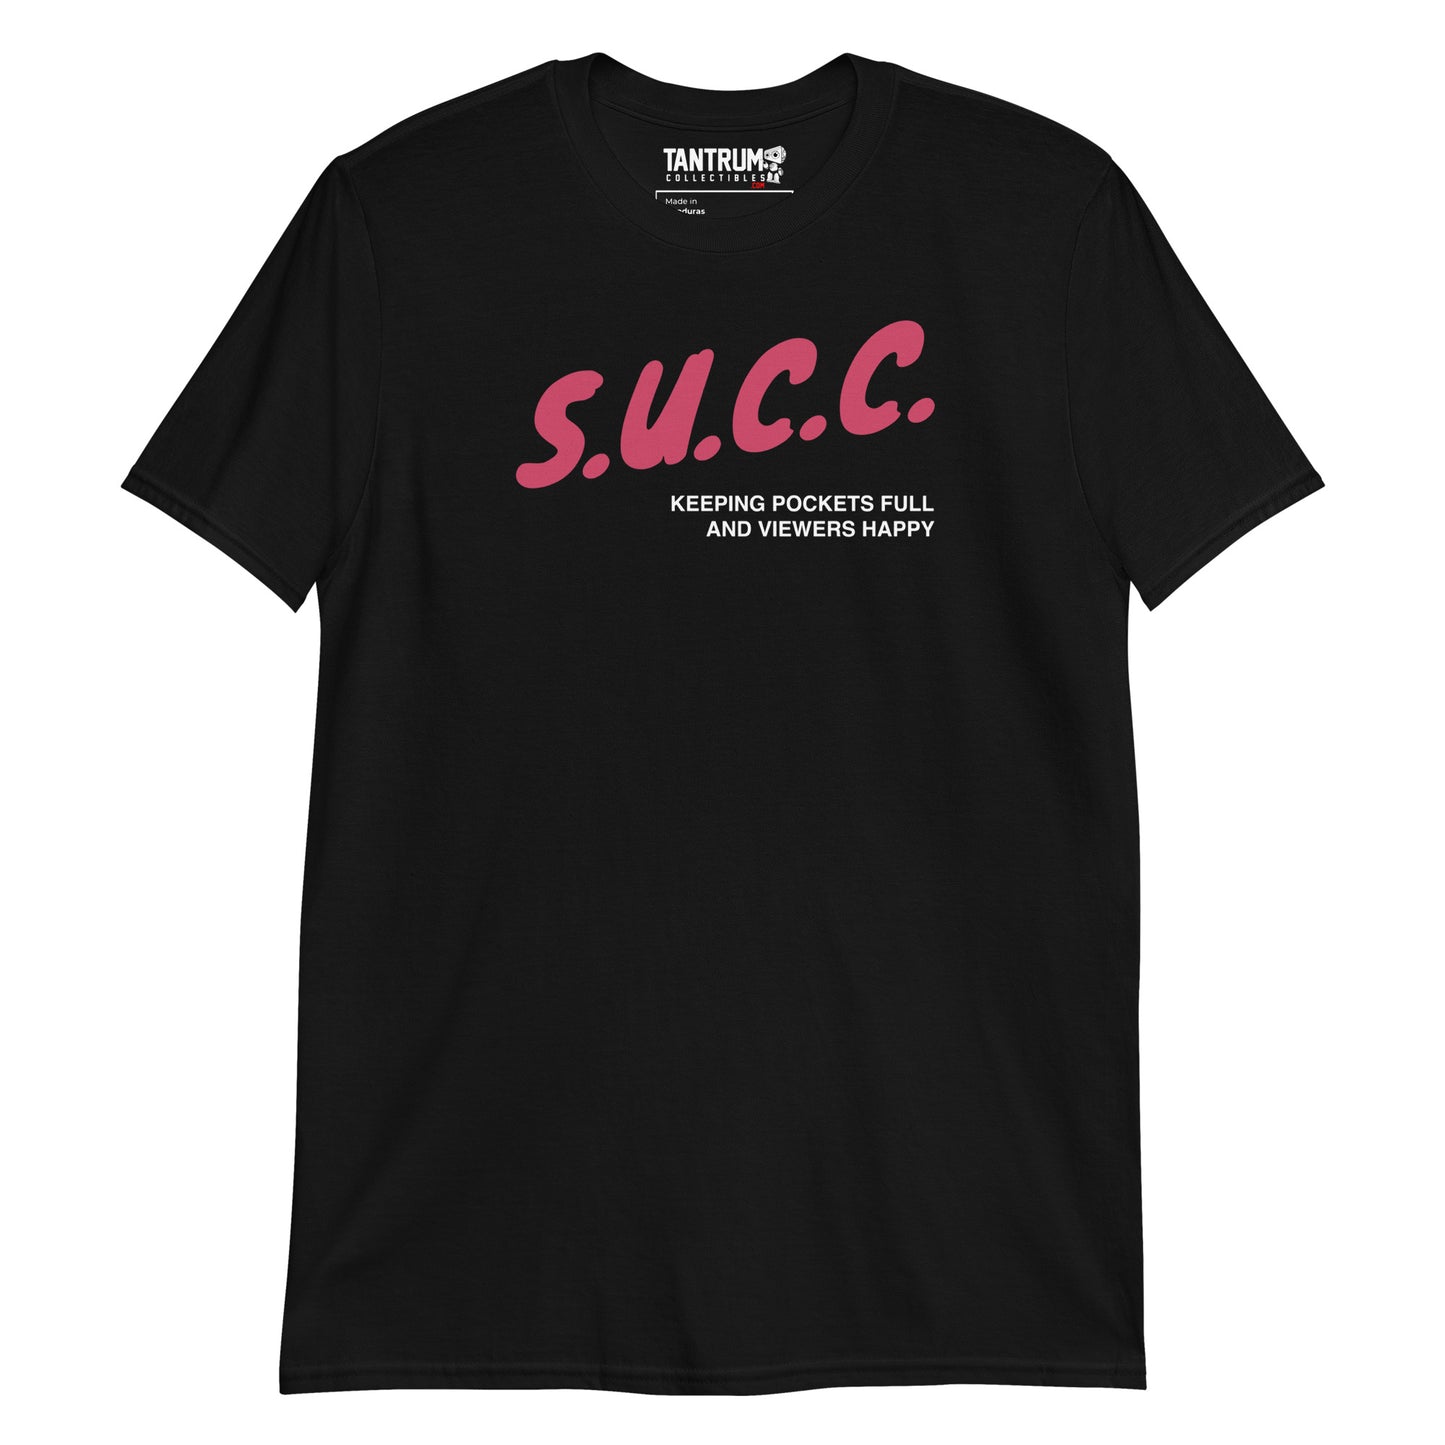 Crowd Control™ - Short-Sleeve Unisex T-Shirt - S.U.C.C. (Company Portal)